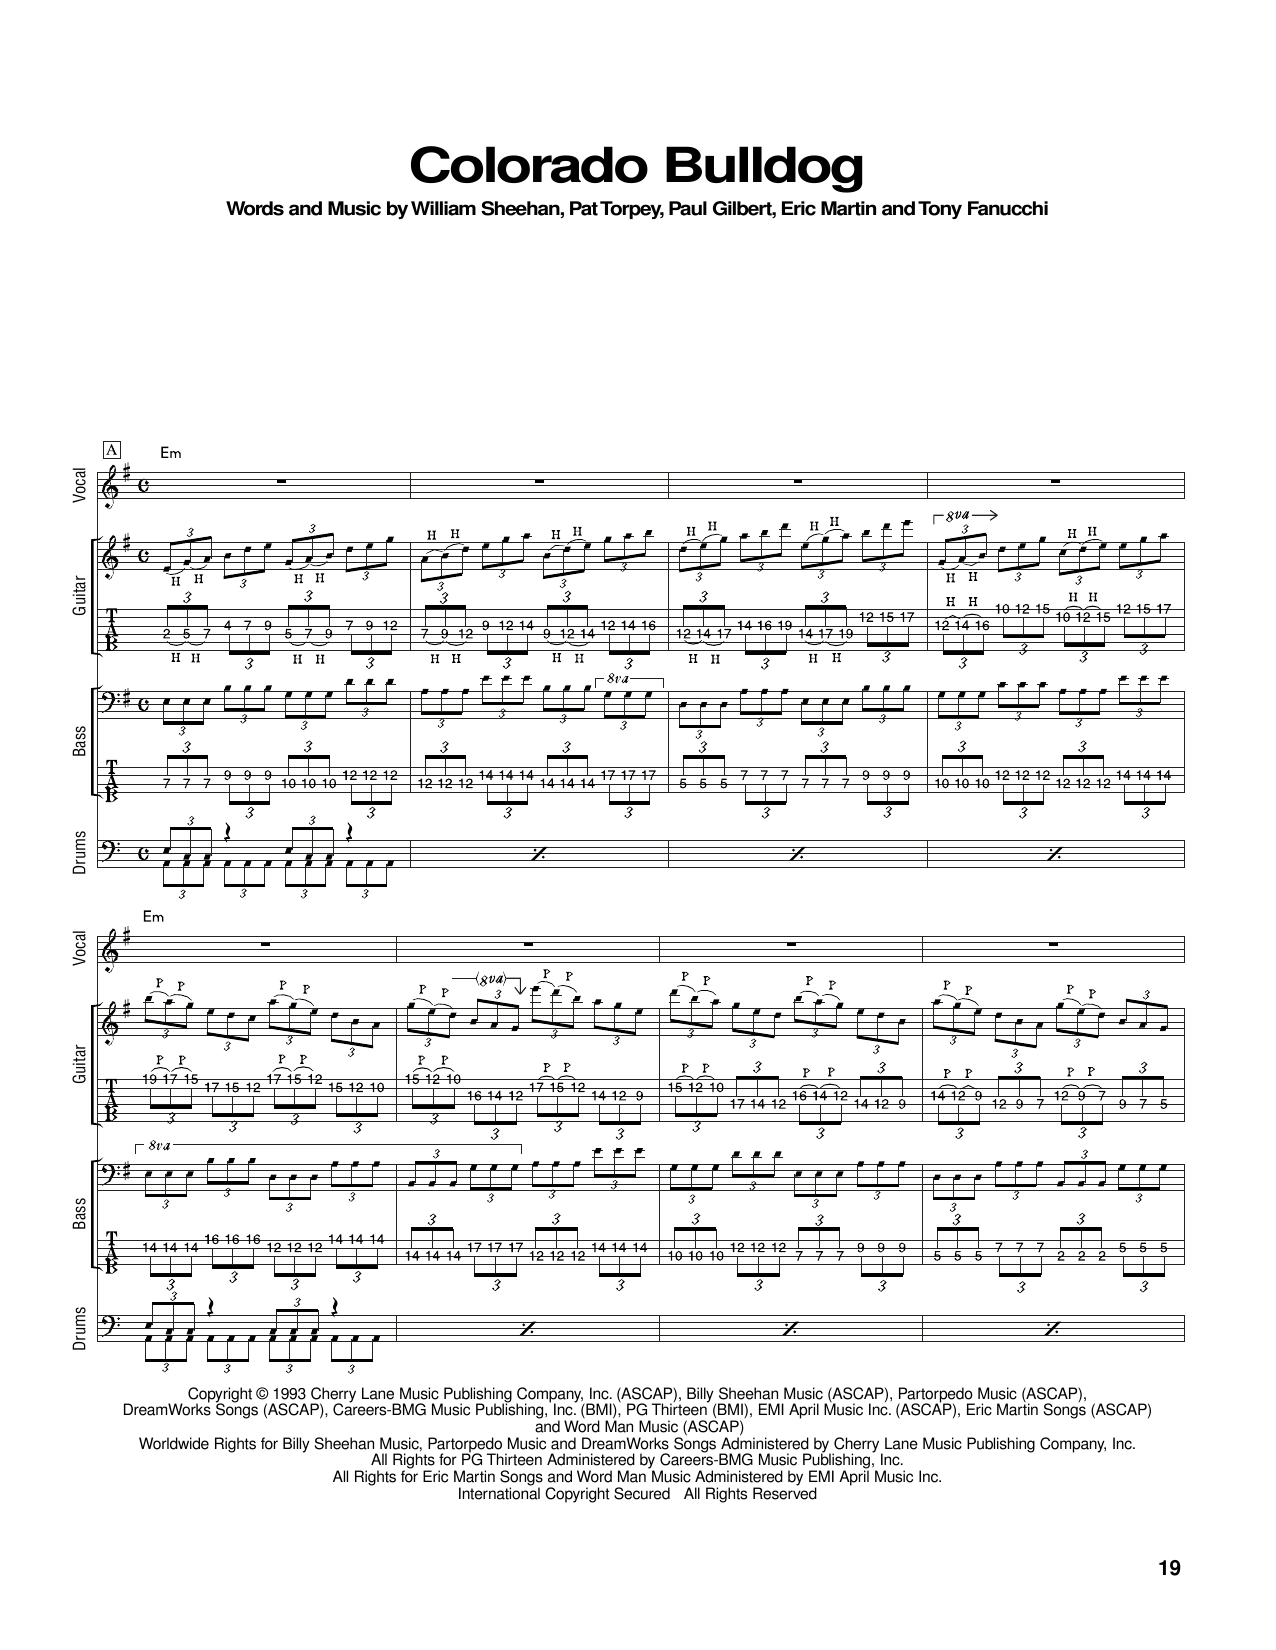 Mr. Big Colorado Bulldog sheet music notes and chords arranged for Guitar Tab